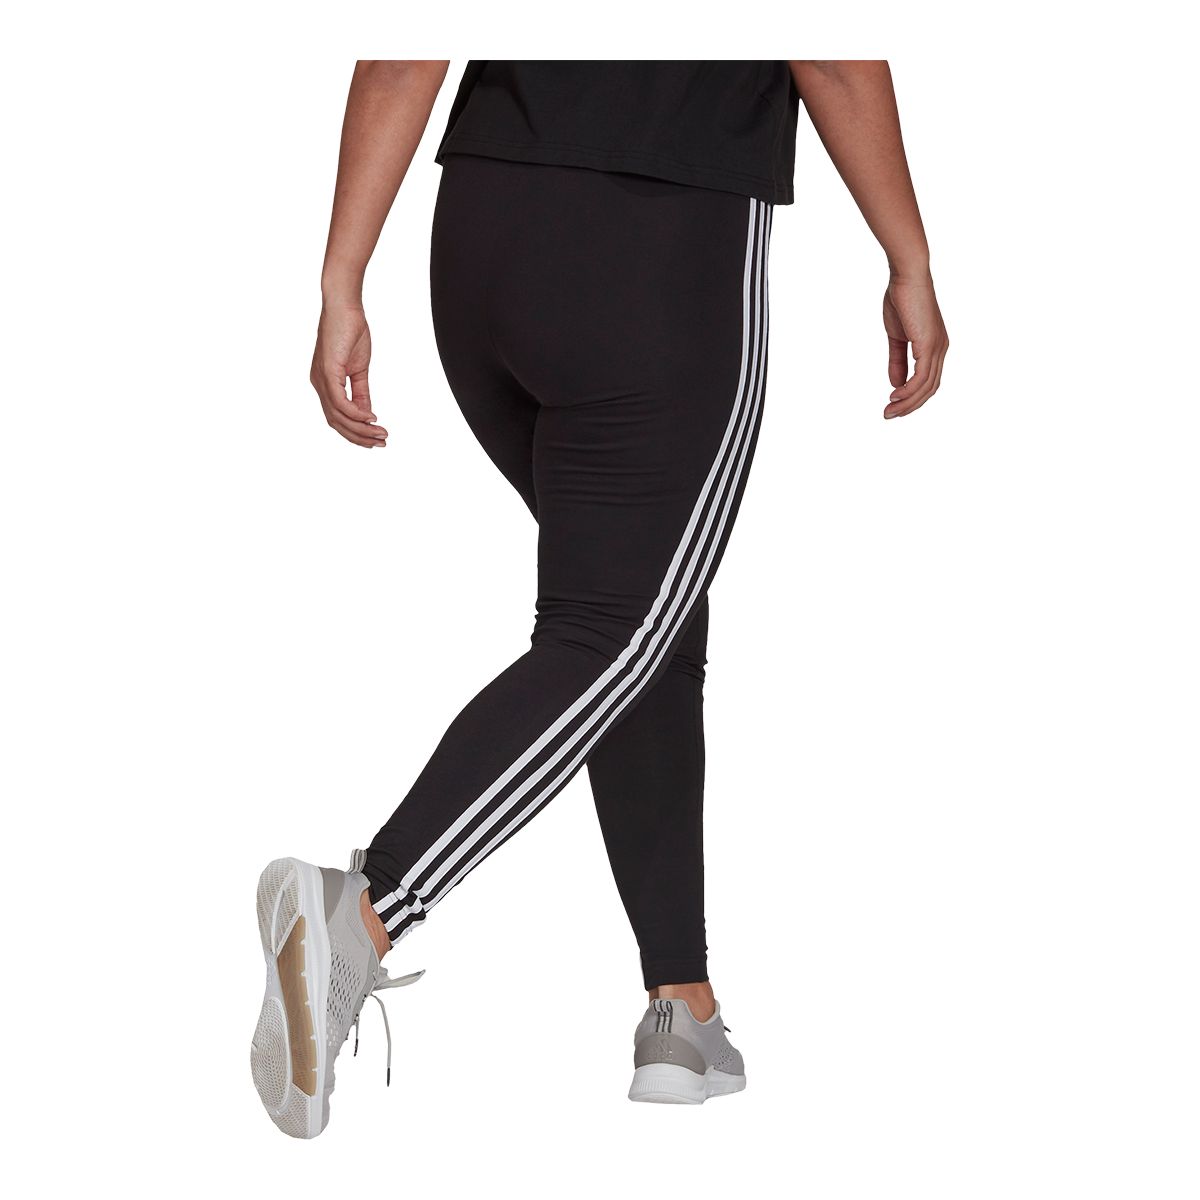 Adidas 3 Stripes Tight Leggings CE2444 Yeezy Womens Sz Small Ashpink $40